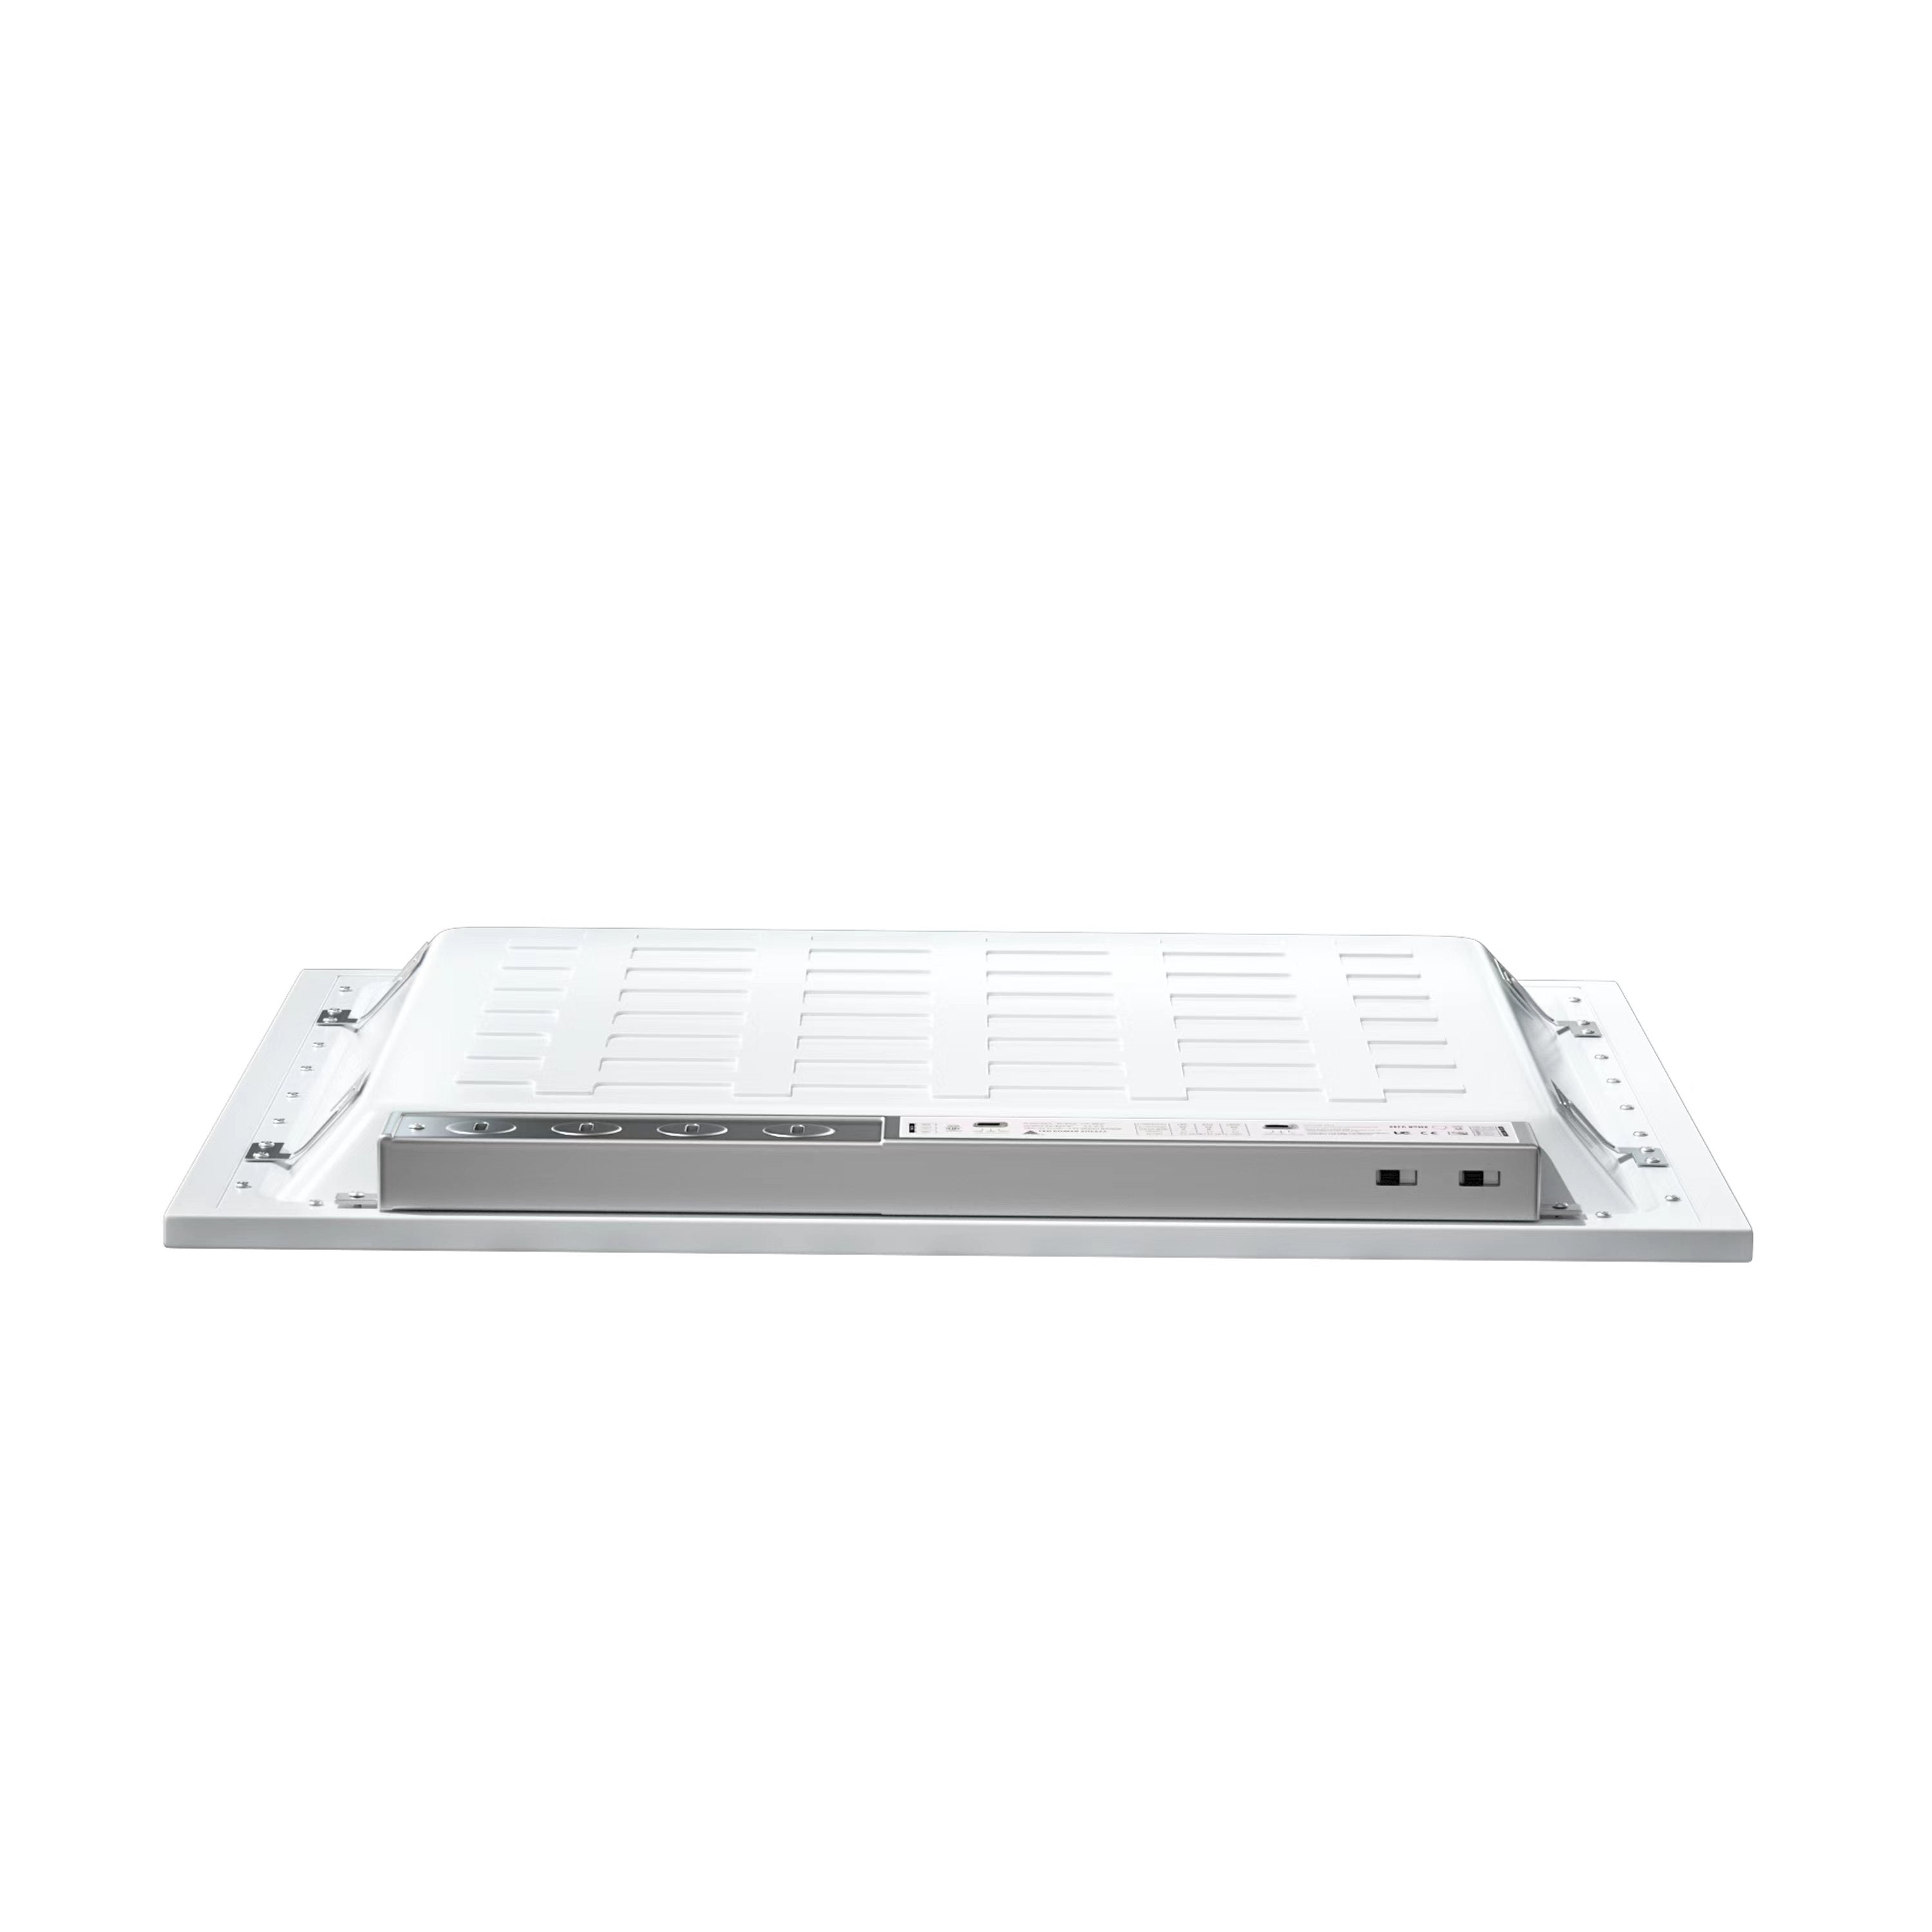 2x2 LED Panel (40W, 6500K) - Dimmable, Backlit, Daylight Glow 5000 Lumens, Recessed Mount, Sleek Design, DLC Certified